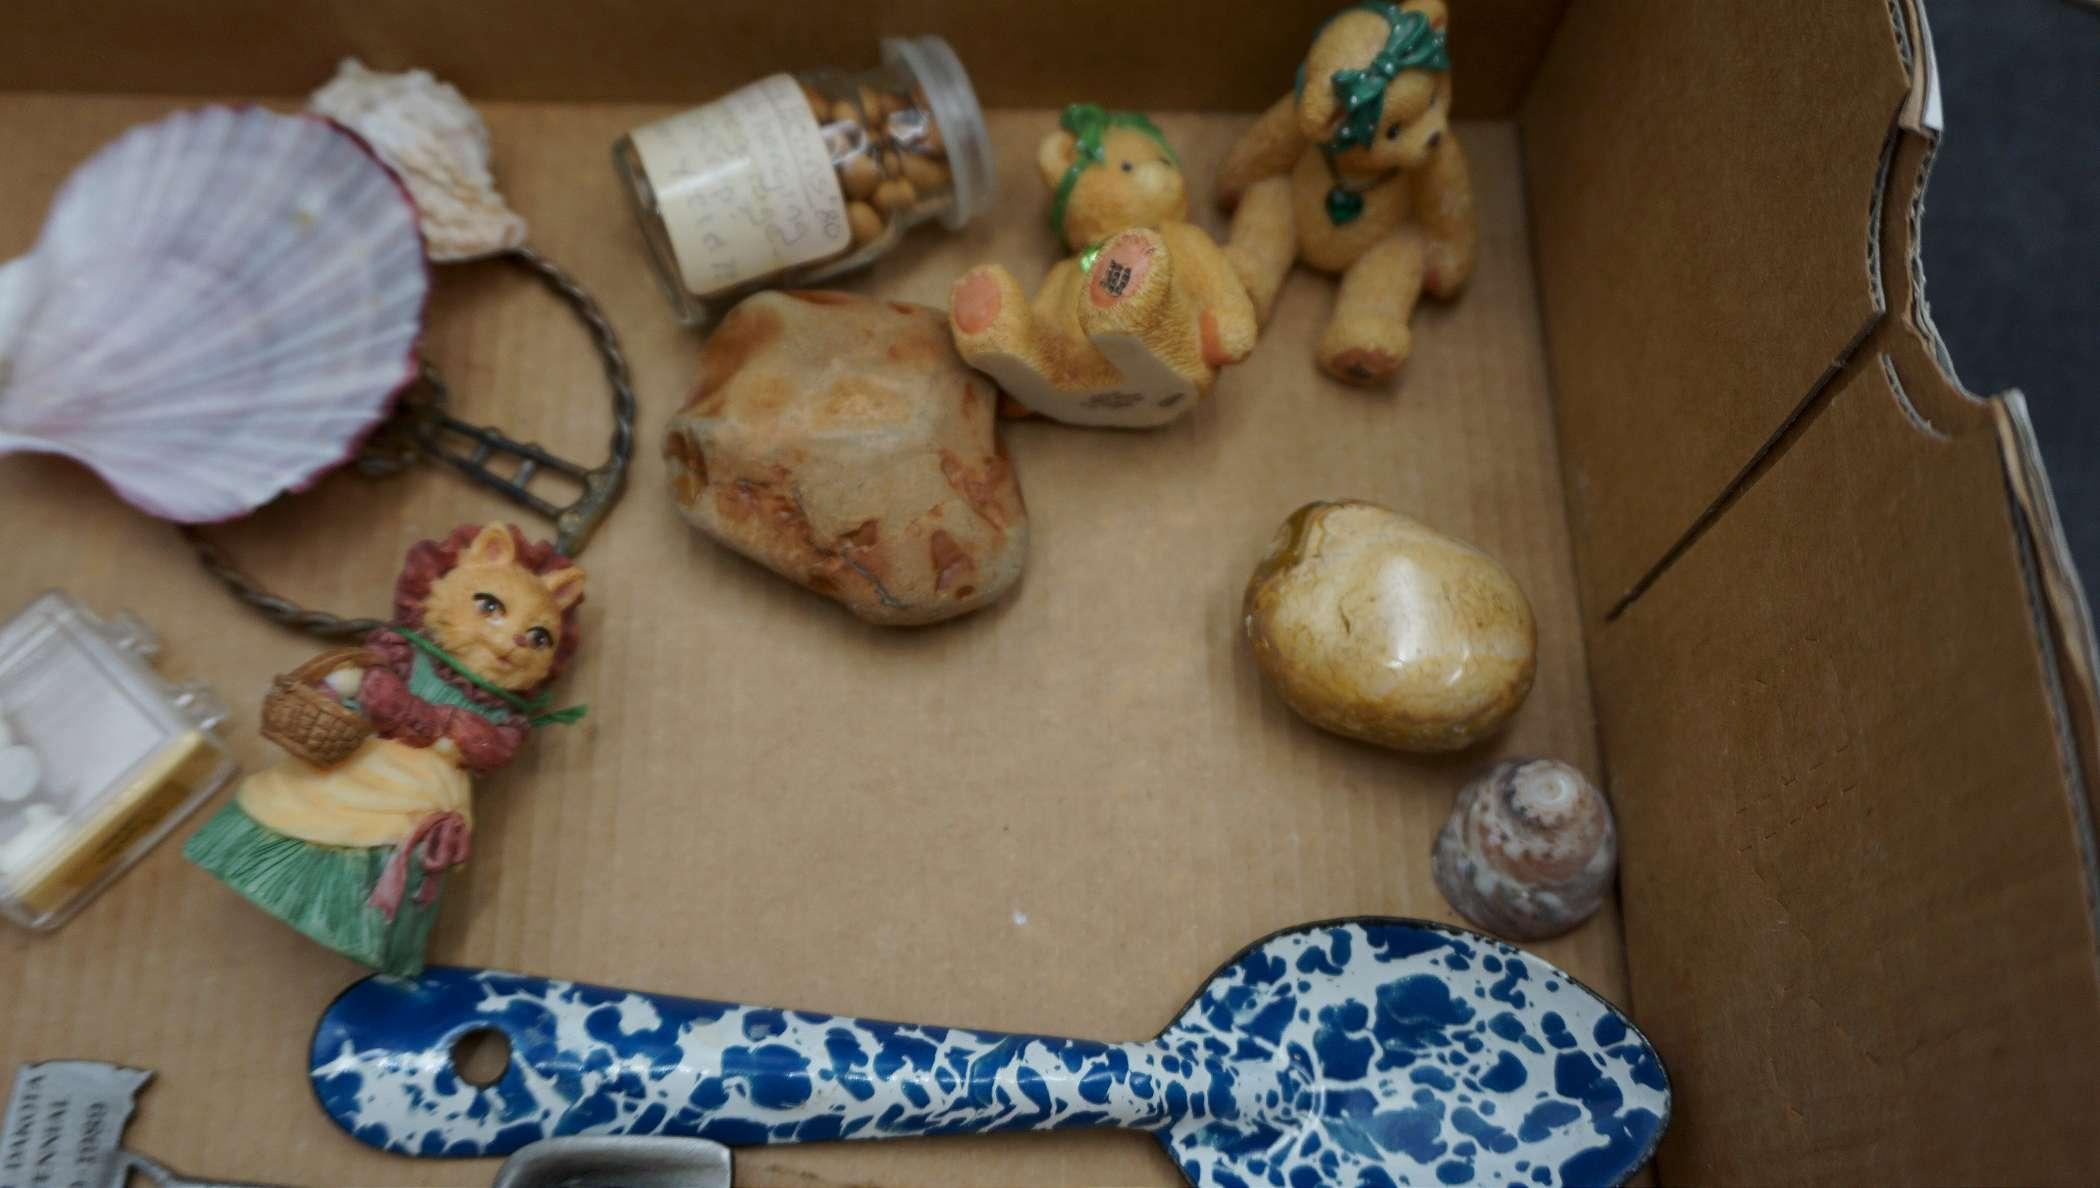 Figurines, Stones, Wooden Piece, Small Black Holder, Enamel Spoon